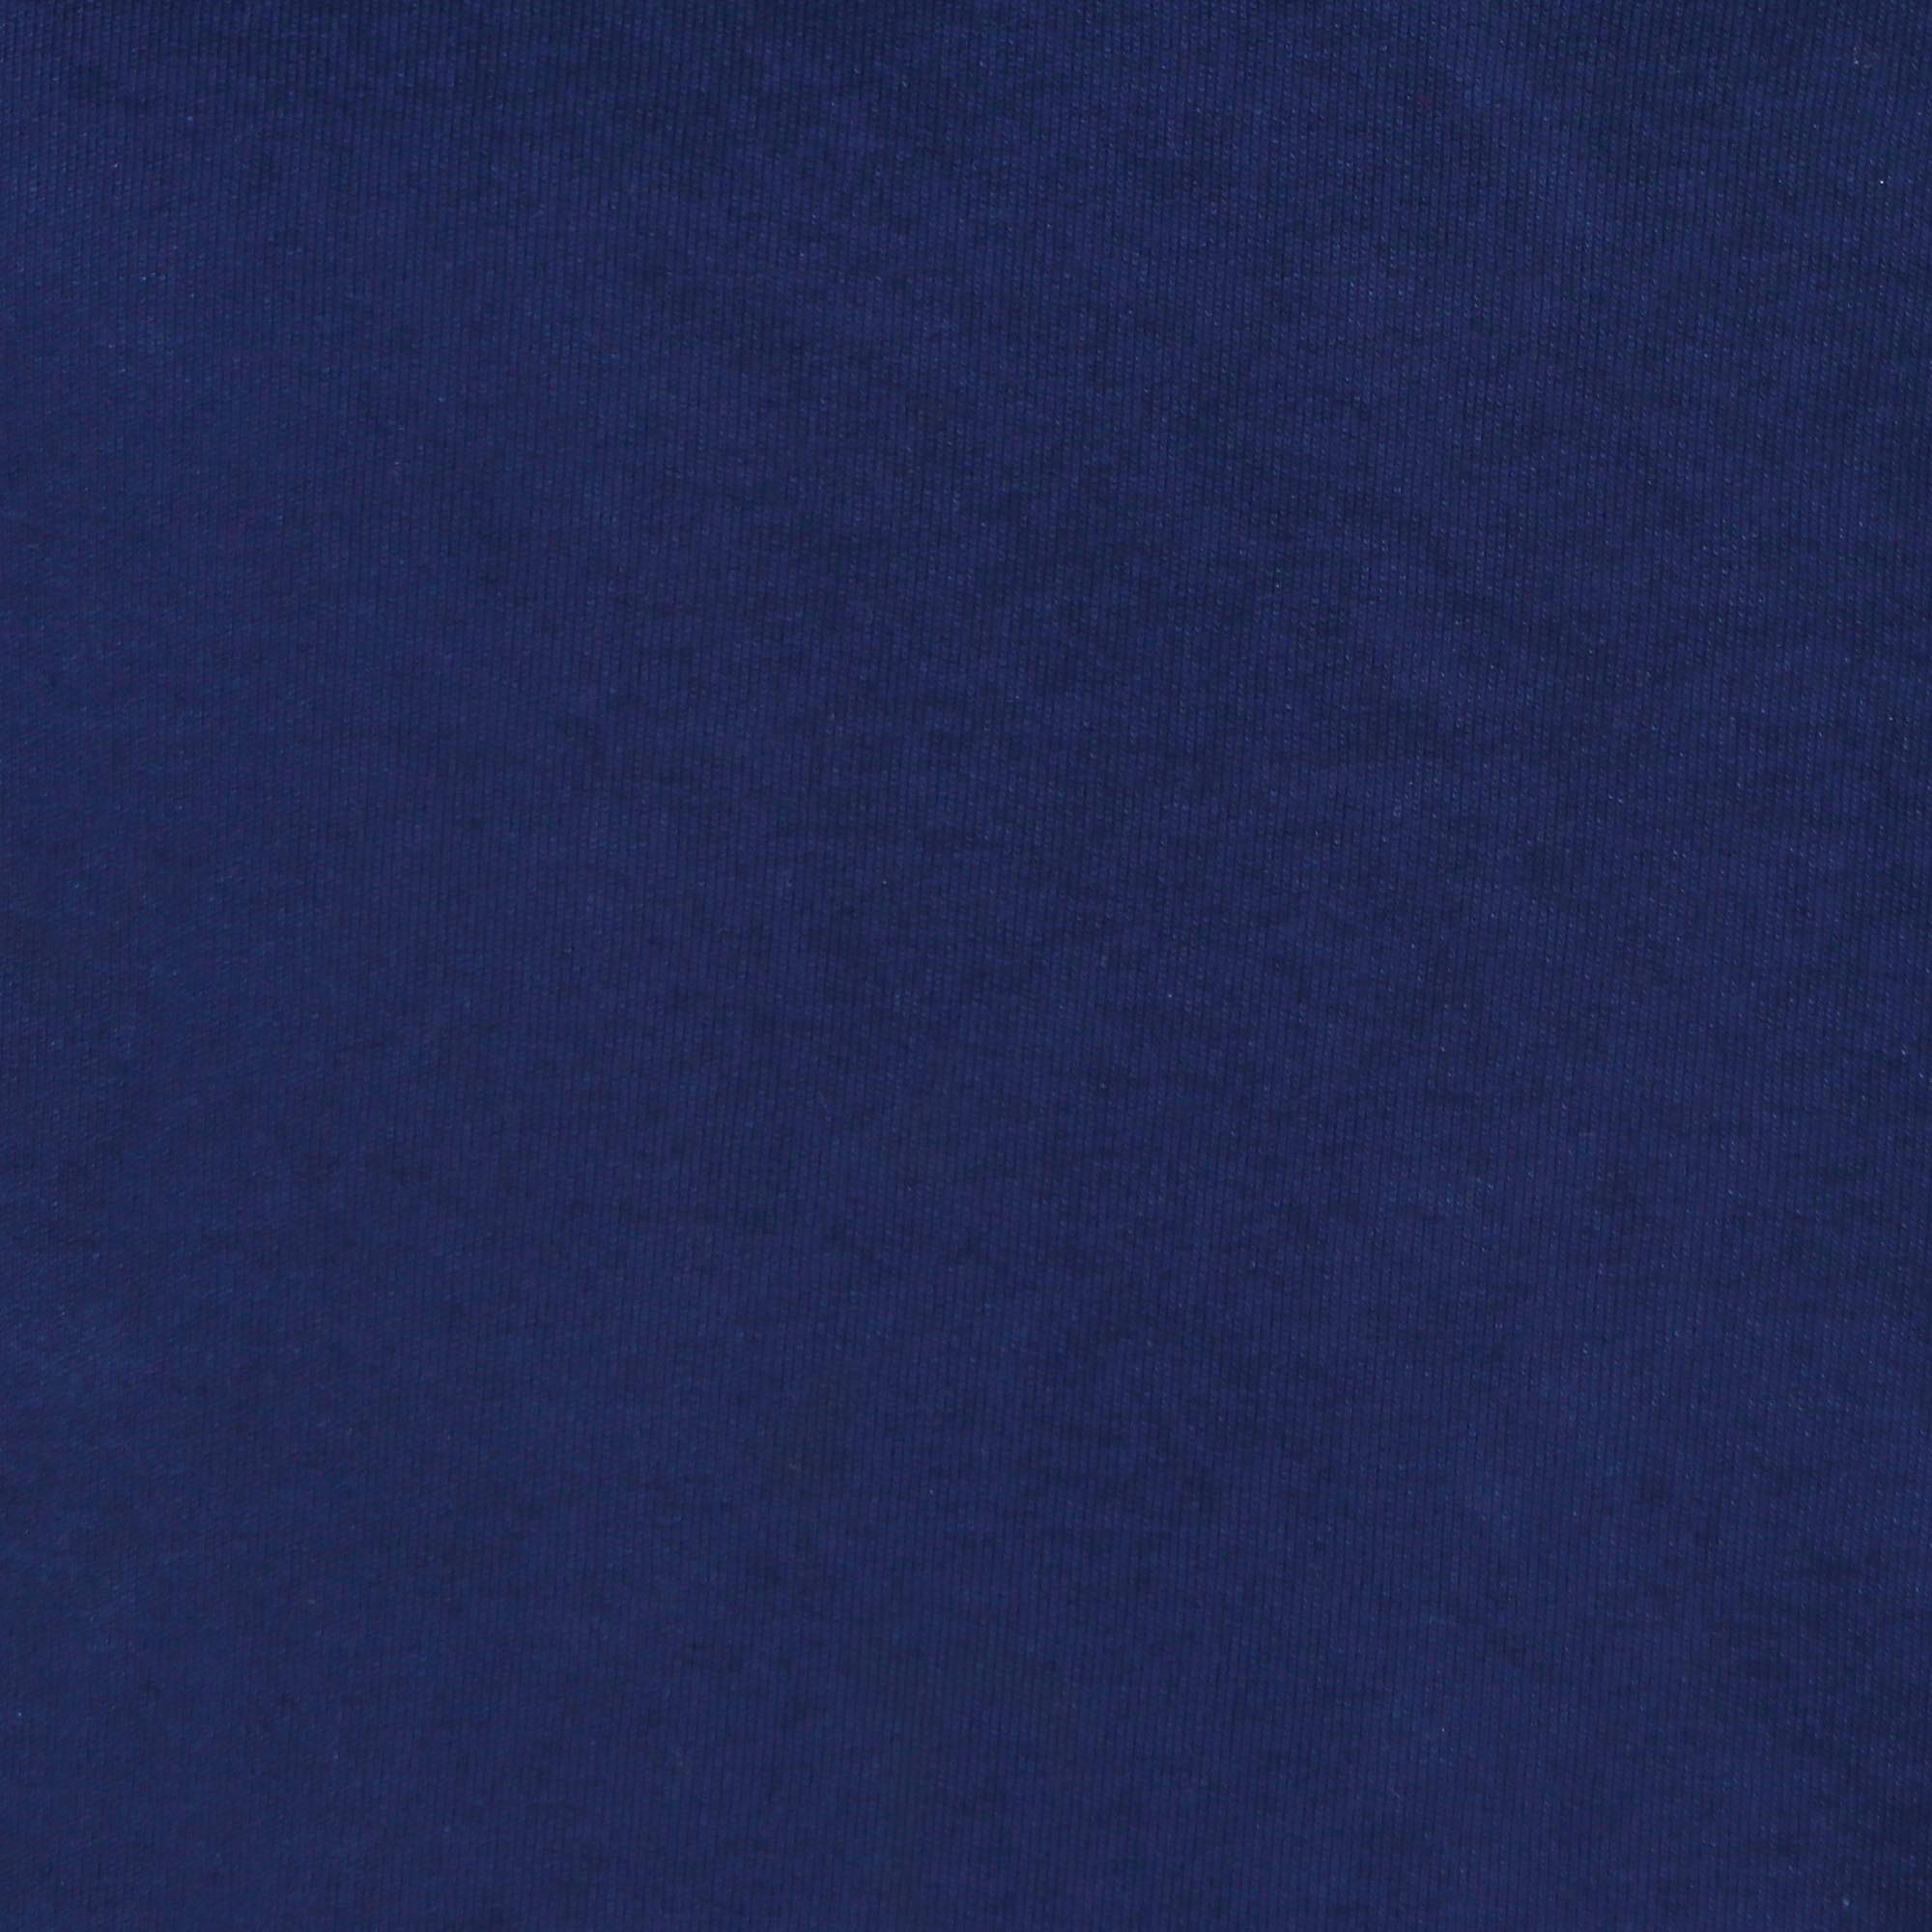 Мужская футболка-поло Diva Teks синяя (DTD-10), цвет синий, размер 54-56 - фото 6